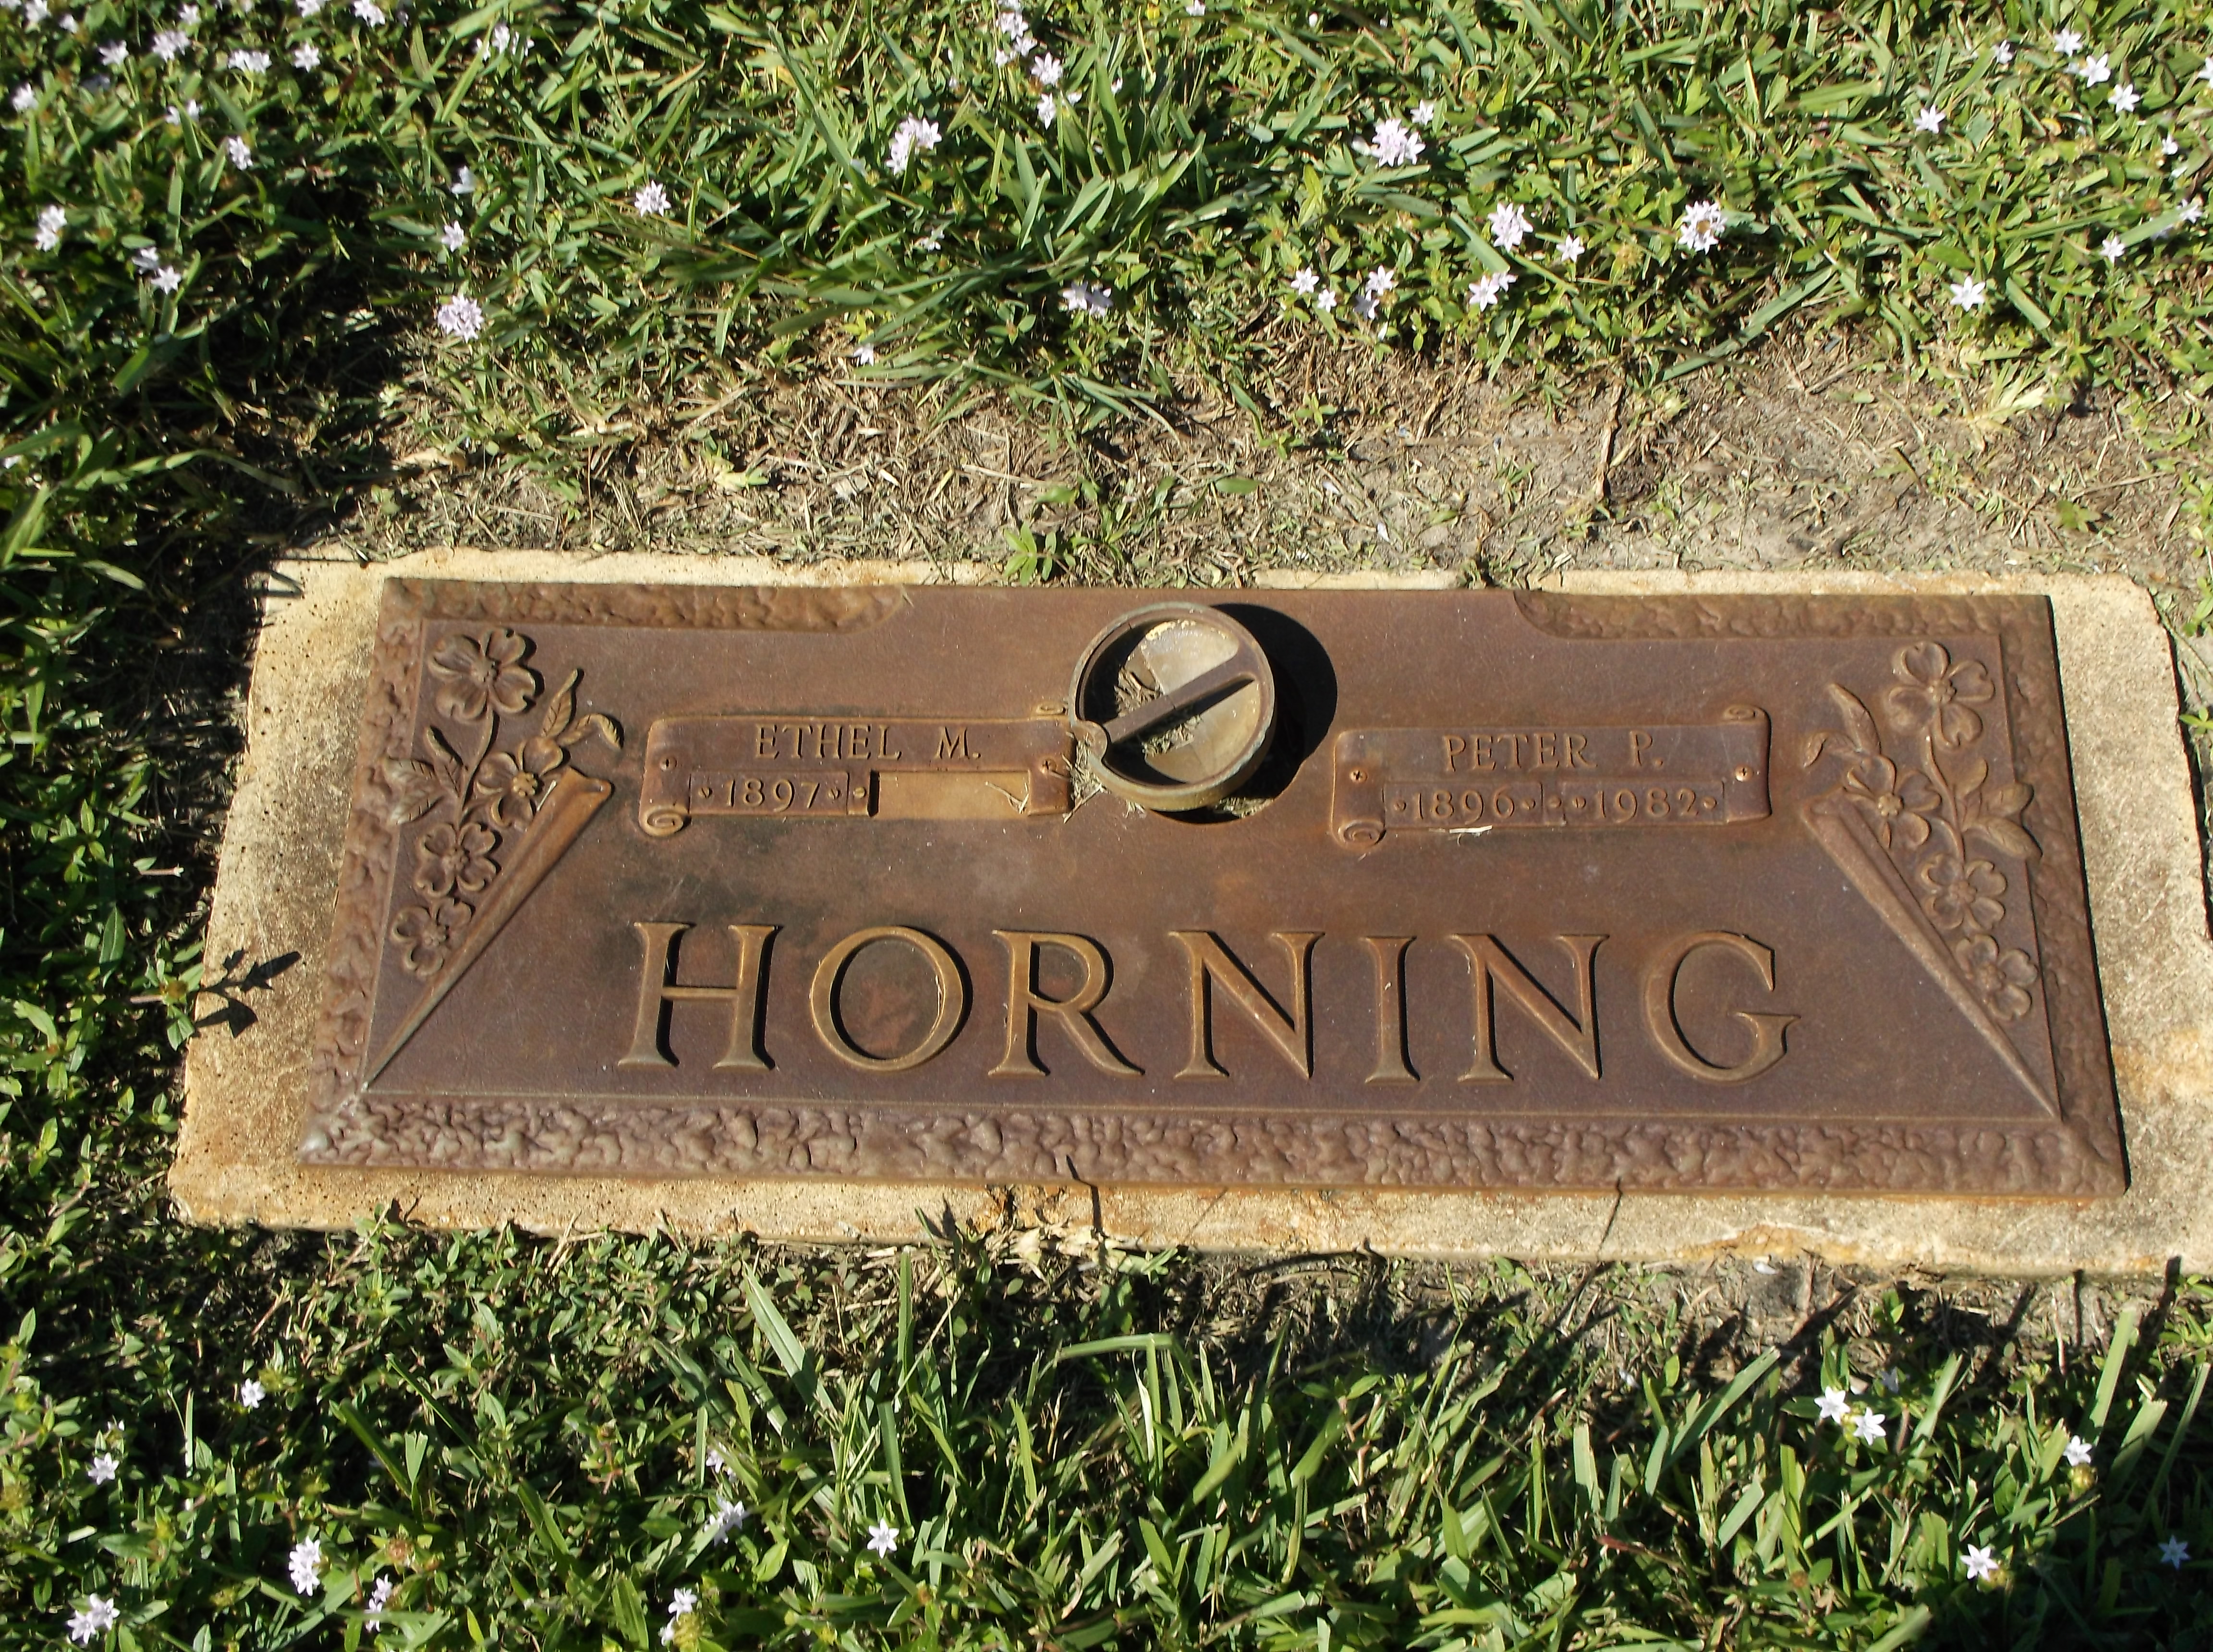 Ethel M Horning